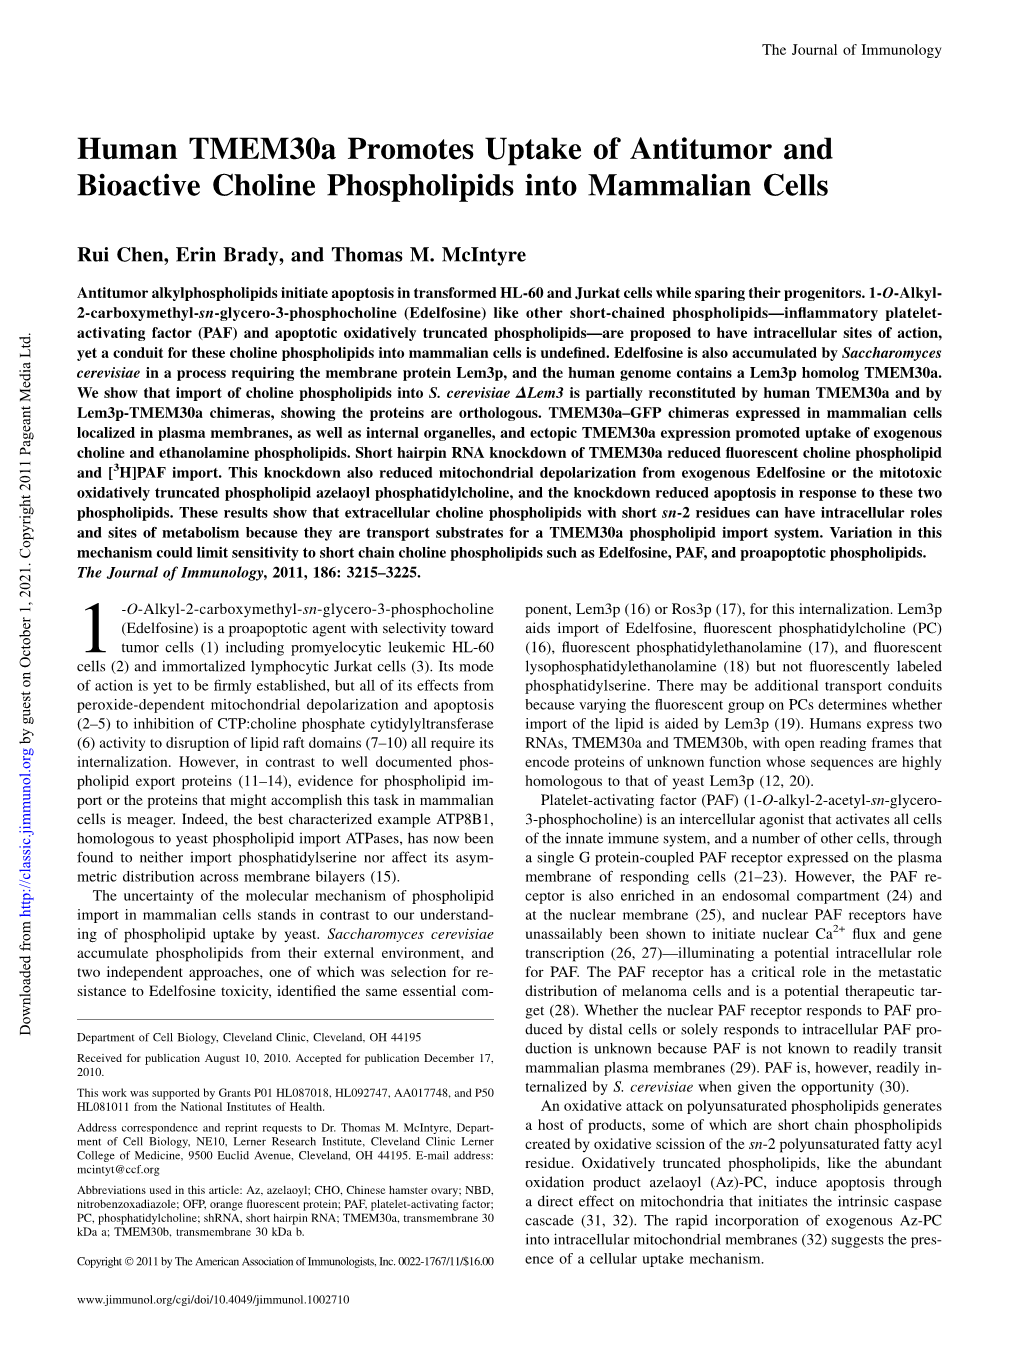 Phospholipids Into Mammalian Cells Antitumor and Bioactive Choline